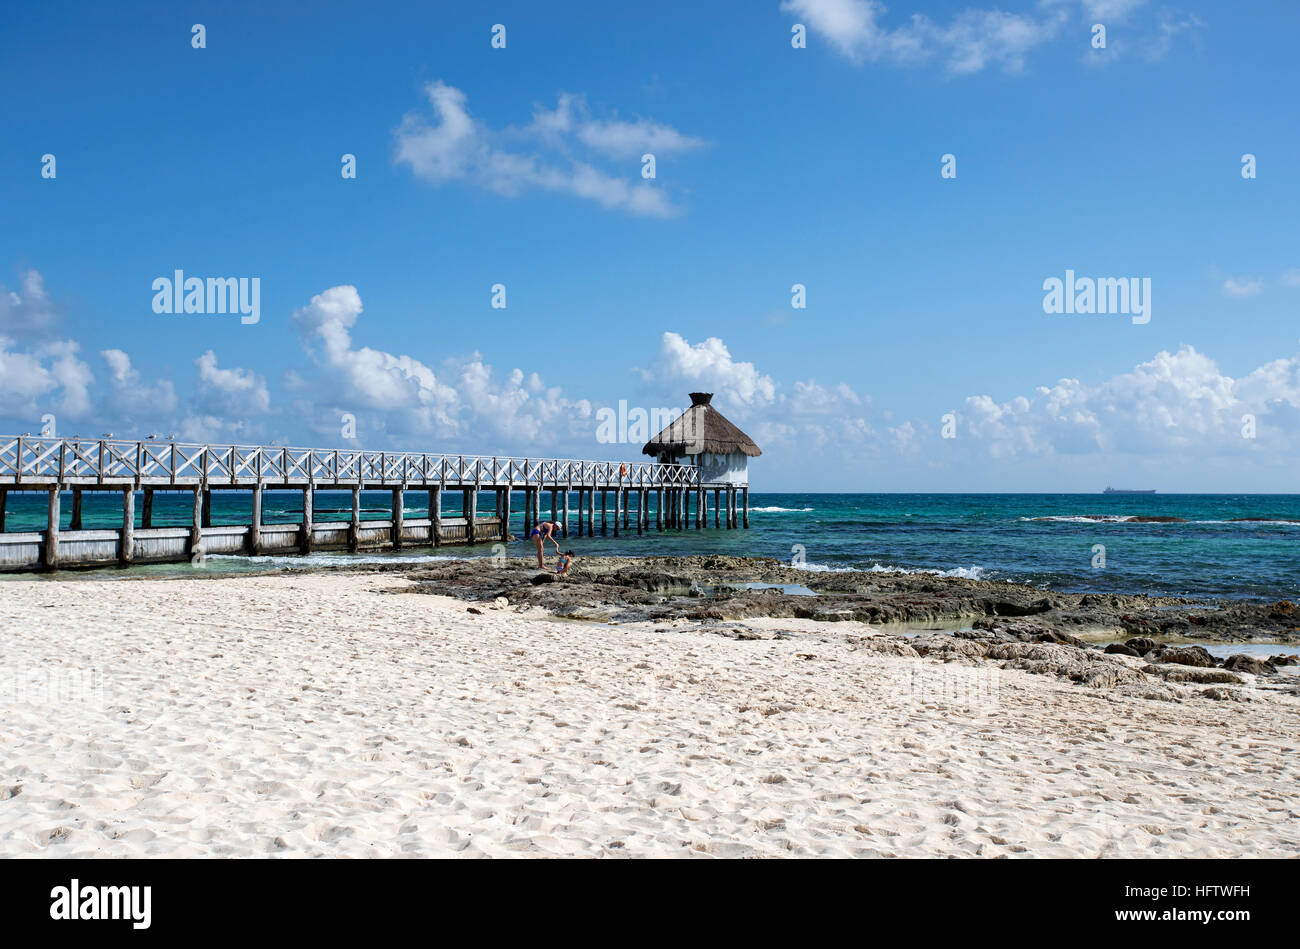 Mexico Caribbean Ocean beach pier vacation. Luxury resort Mexican Mayan Riviera Cancun. Swimming , beach, tropical jungle activities. Stock Photo